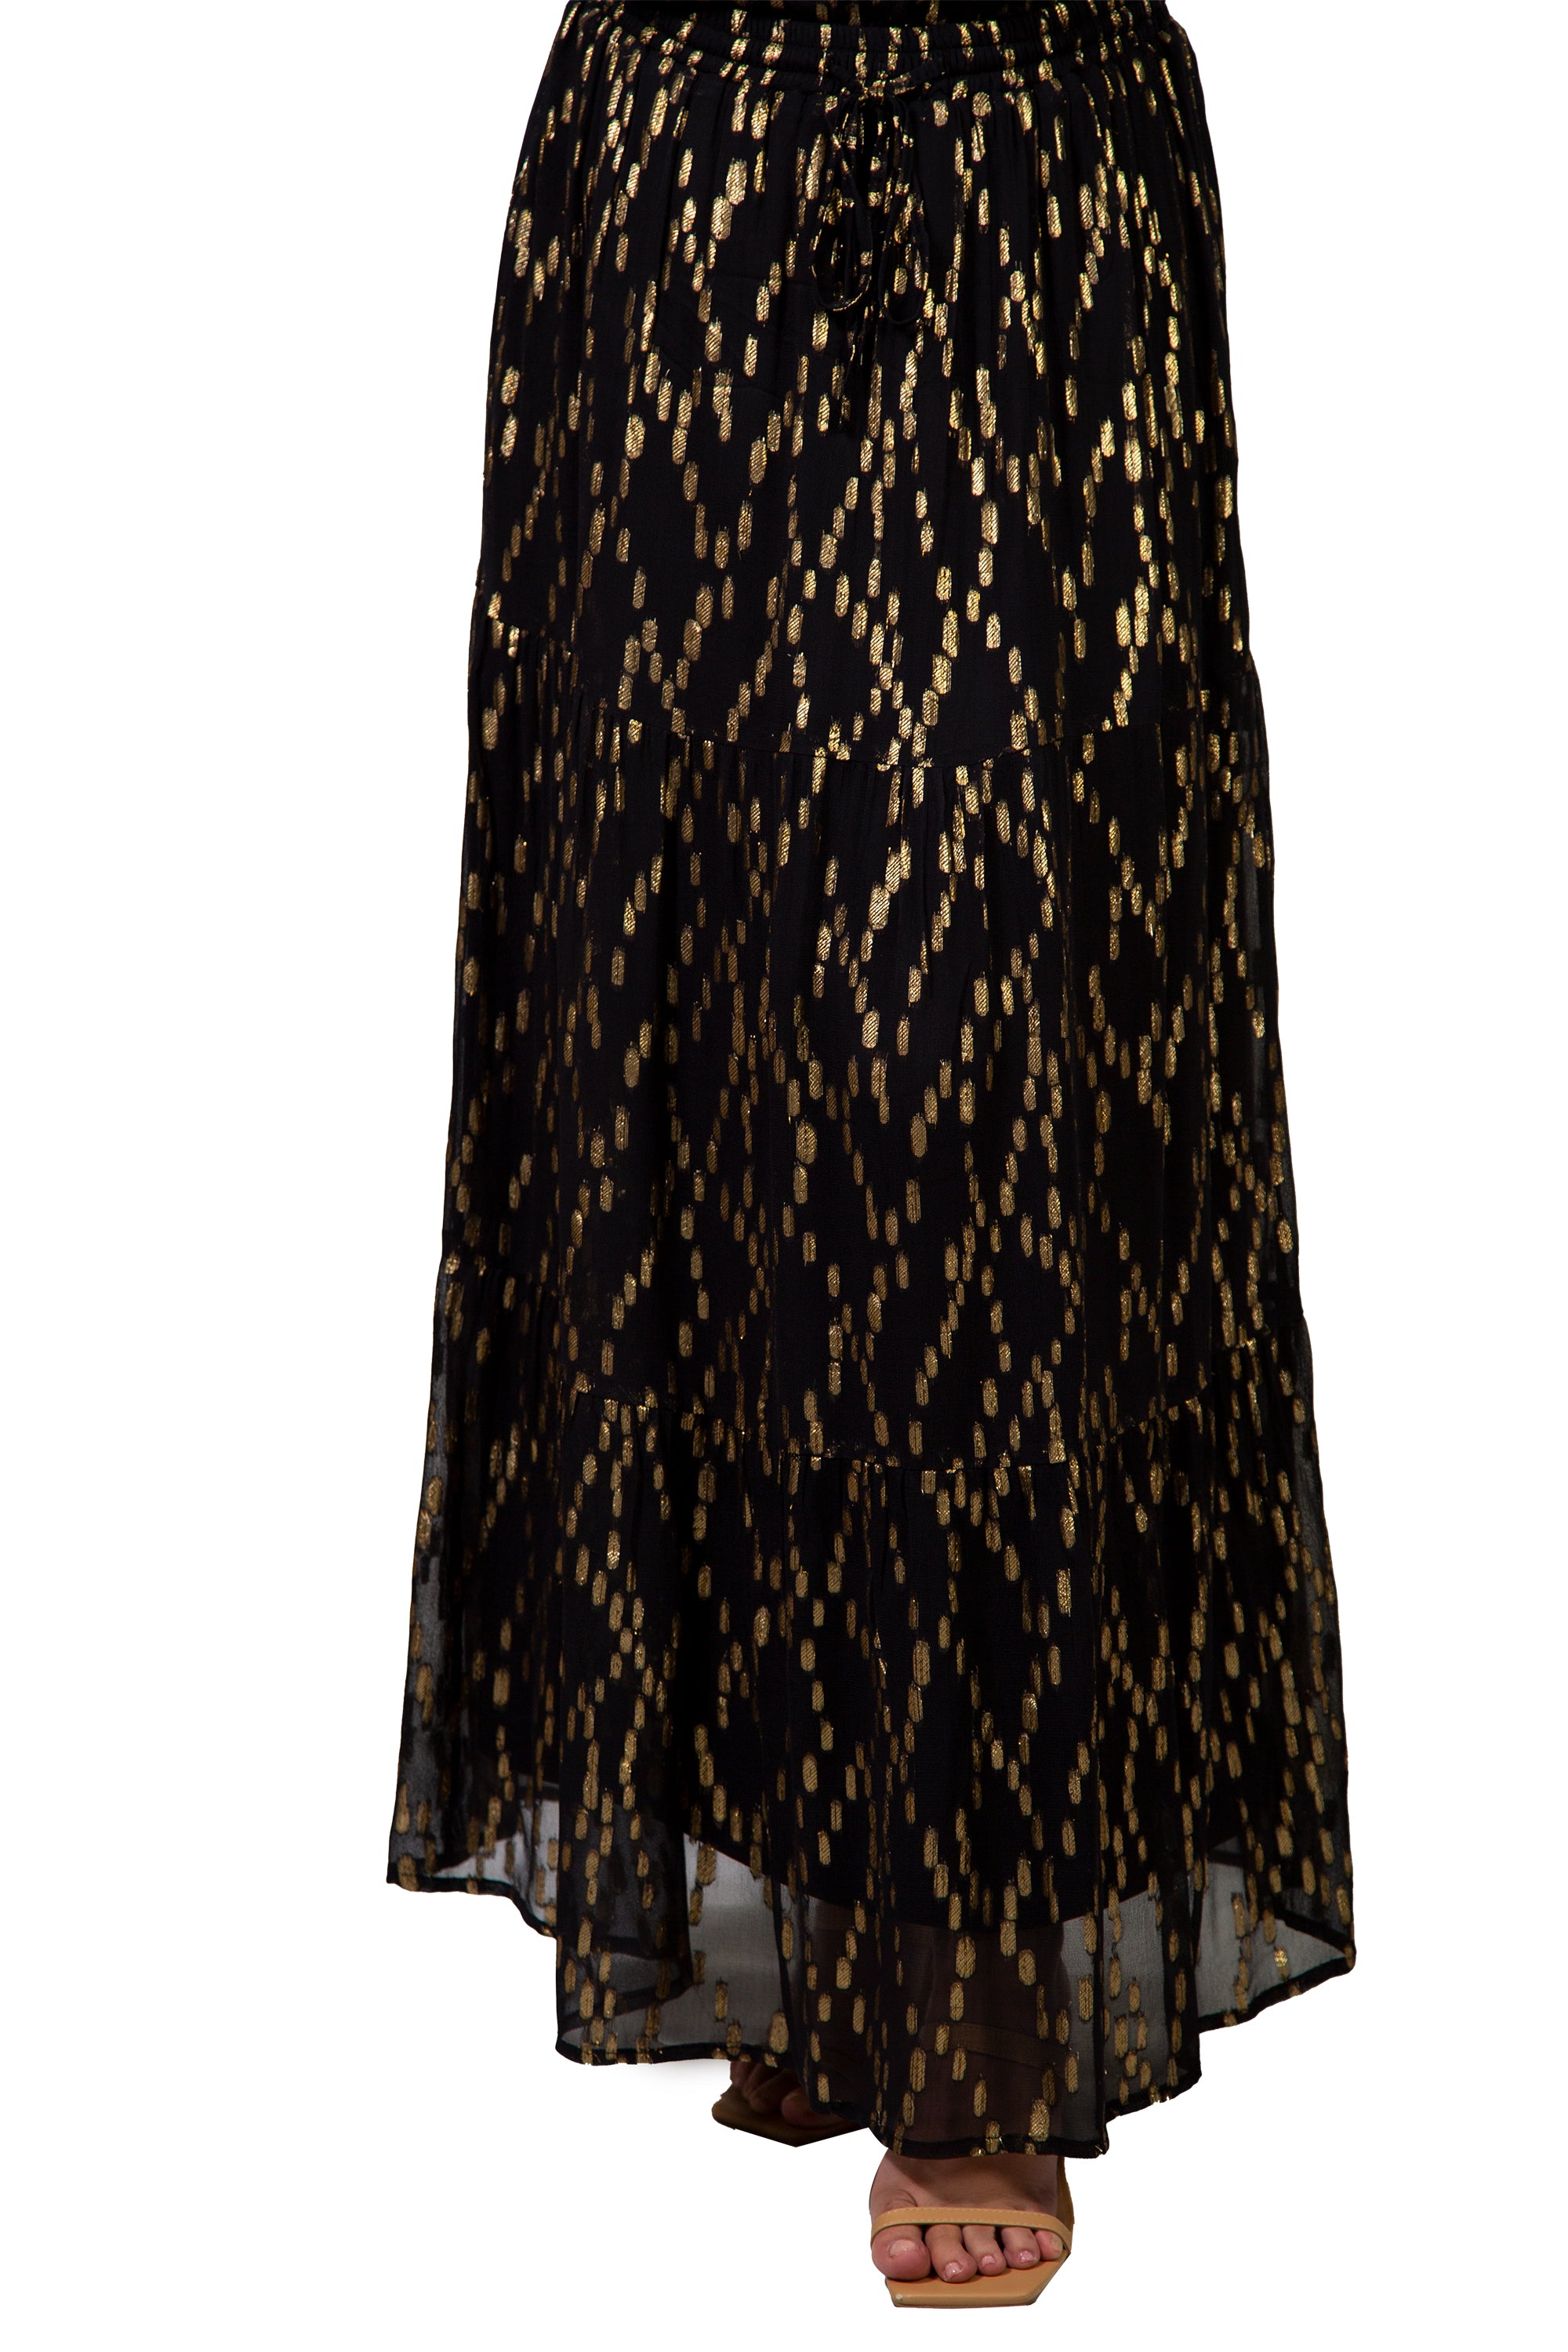 Black/gold Metallic-Dotted Maxi Skirt 2